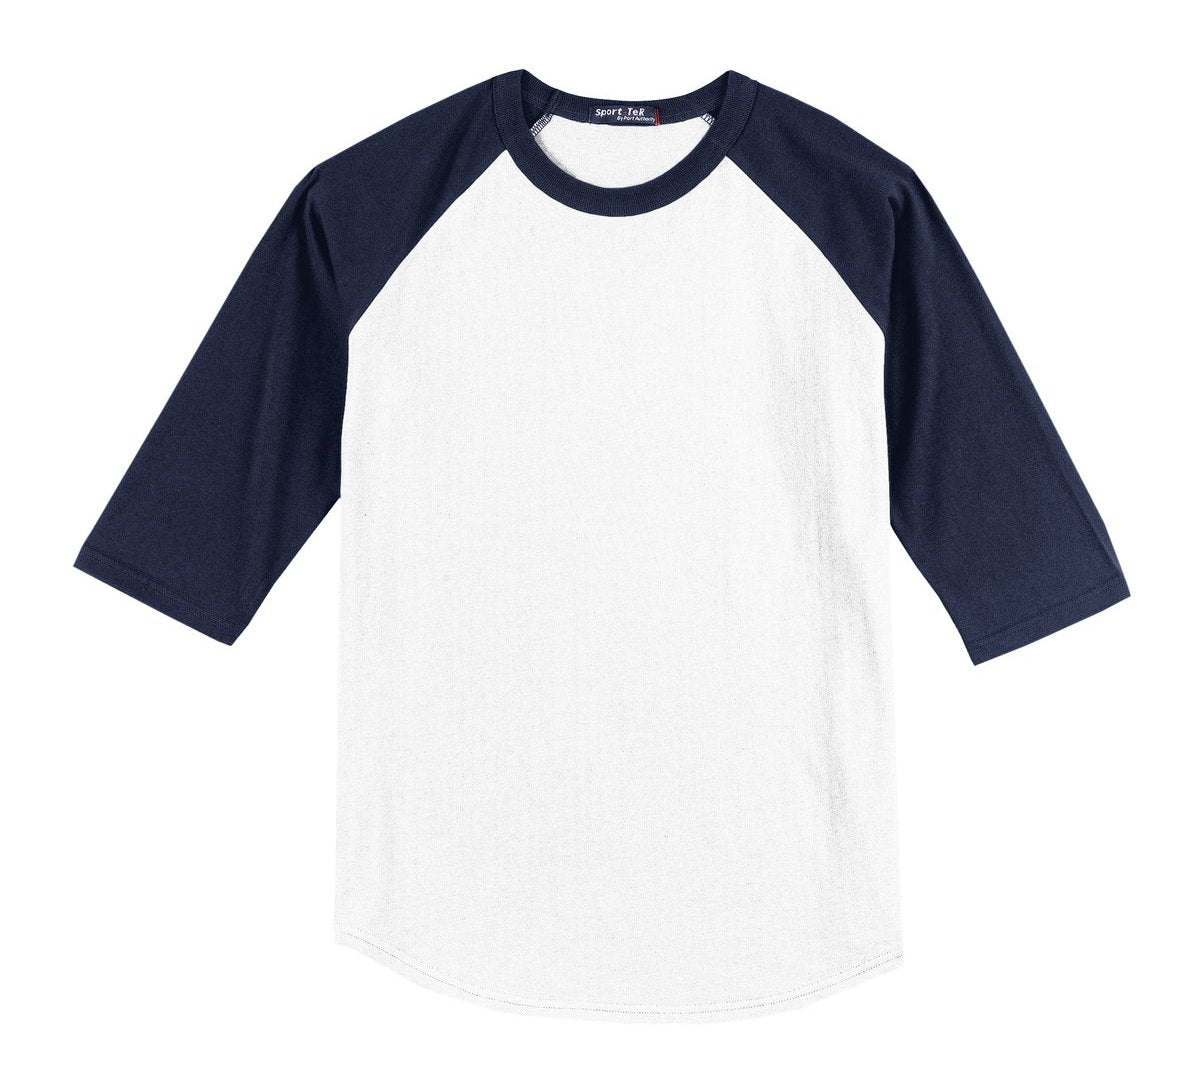 Sample 3/4 Sleeve Baseball Shirt